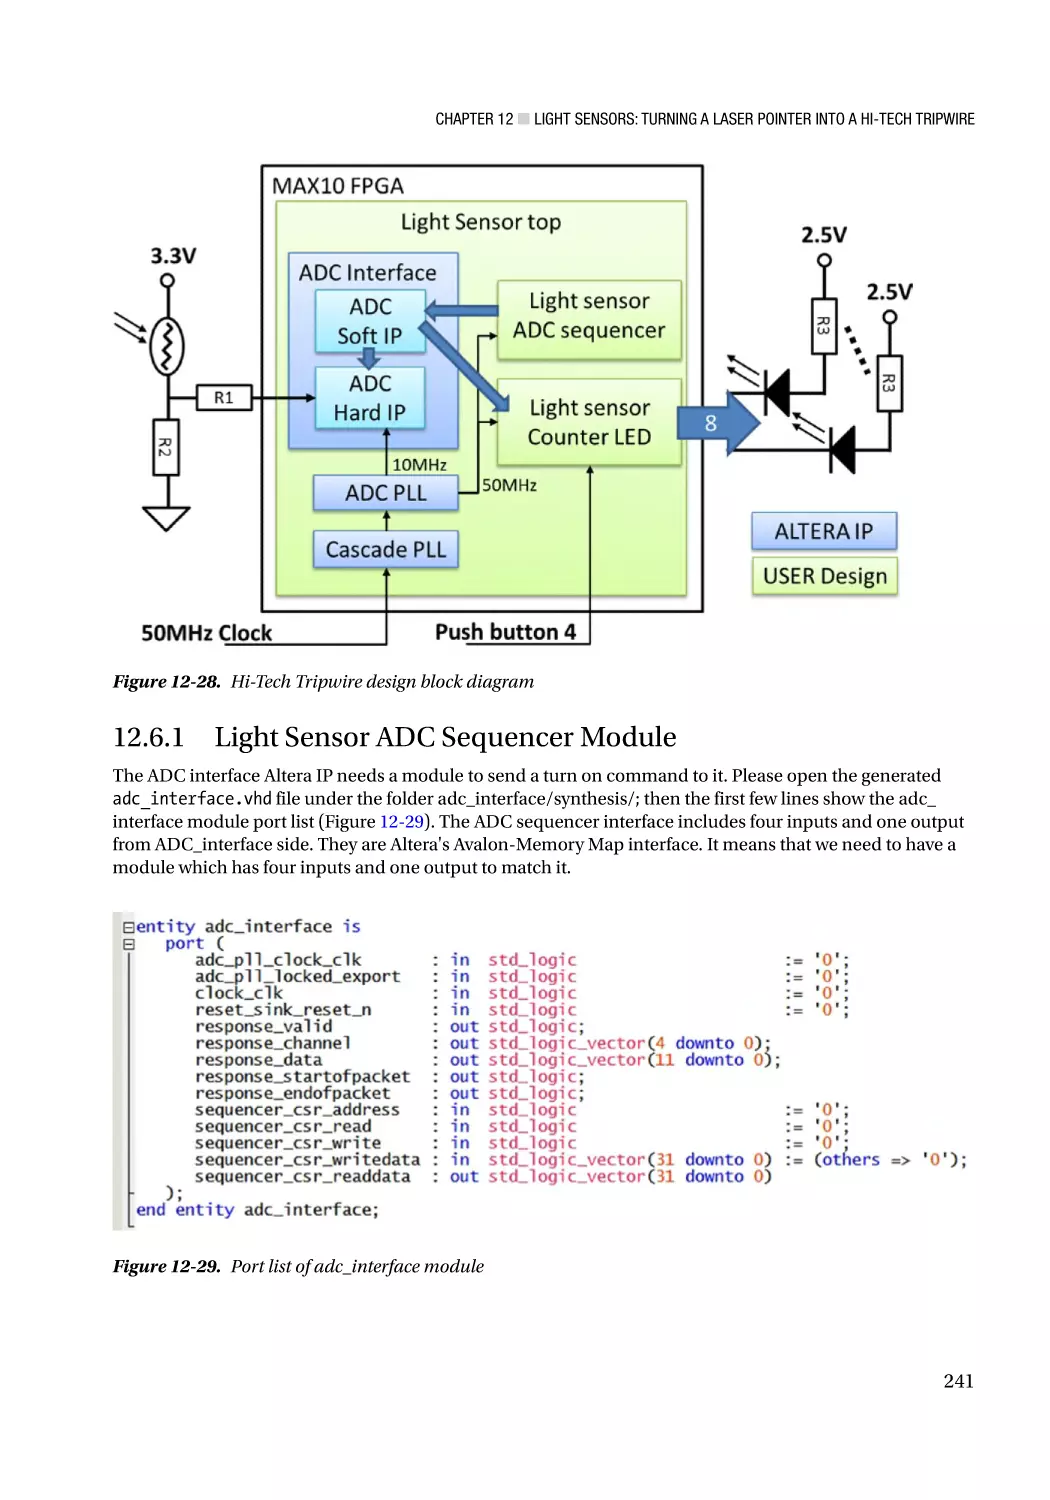 12.6.1 Light Sensor ADC Sequencer Module